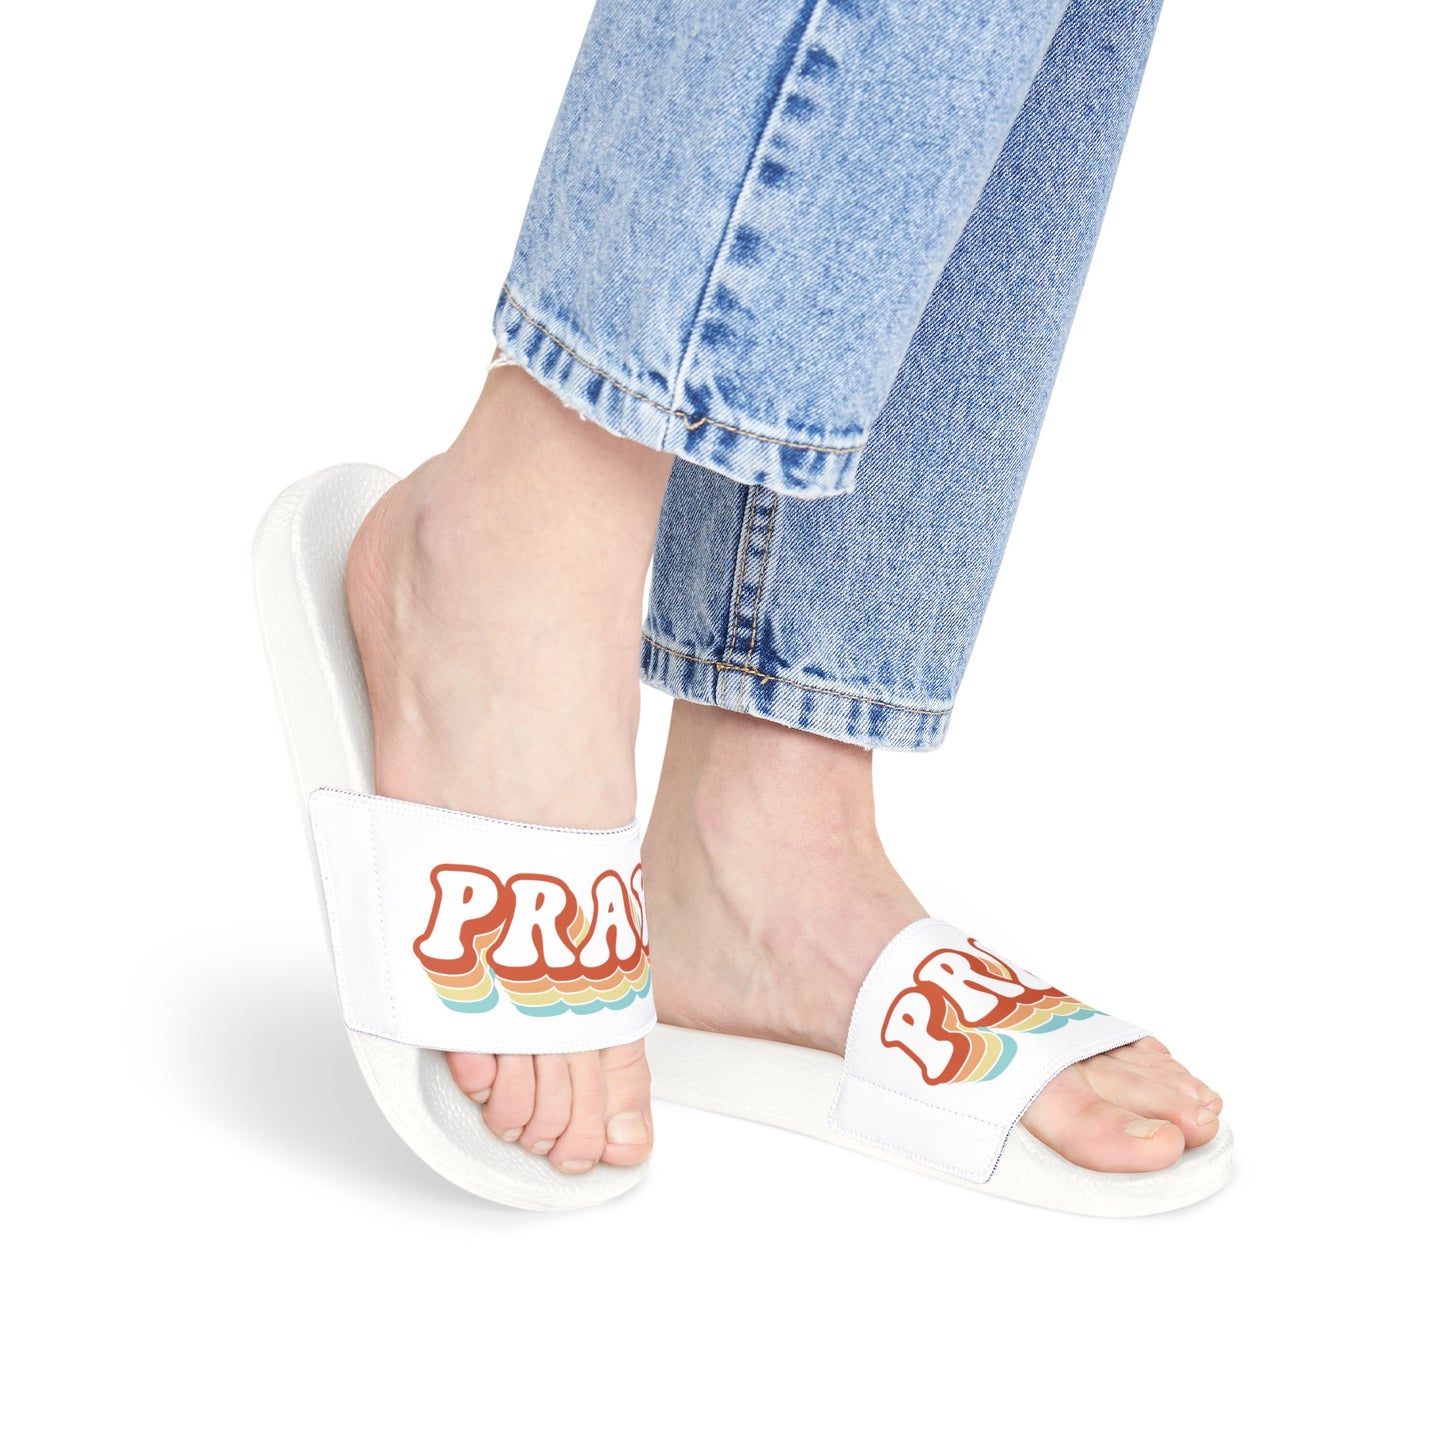 Pray Women's PU Slide Sandals